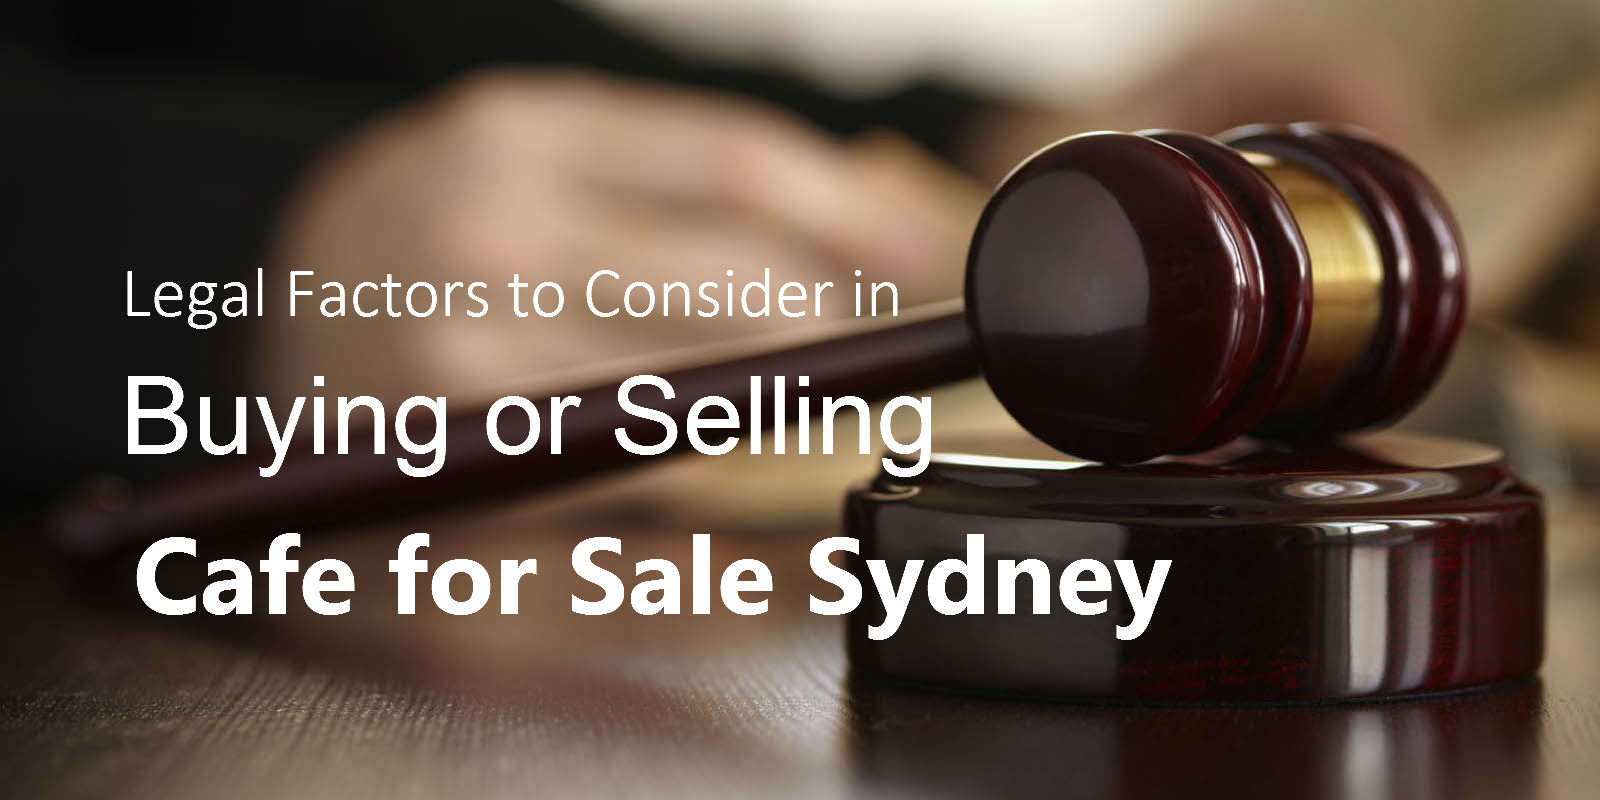 cafe-for-sale-sydney-legal-factors